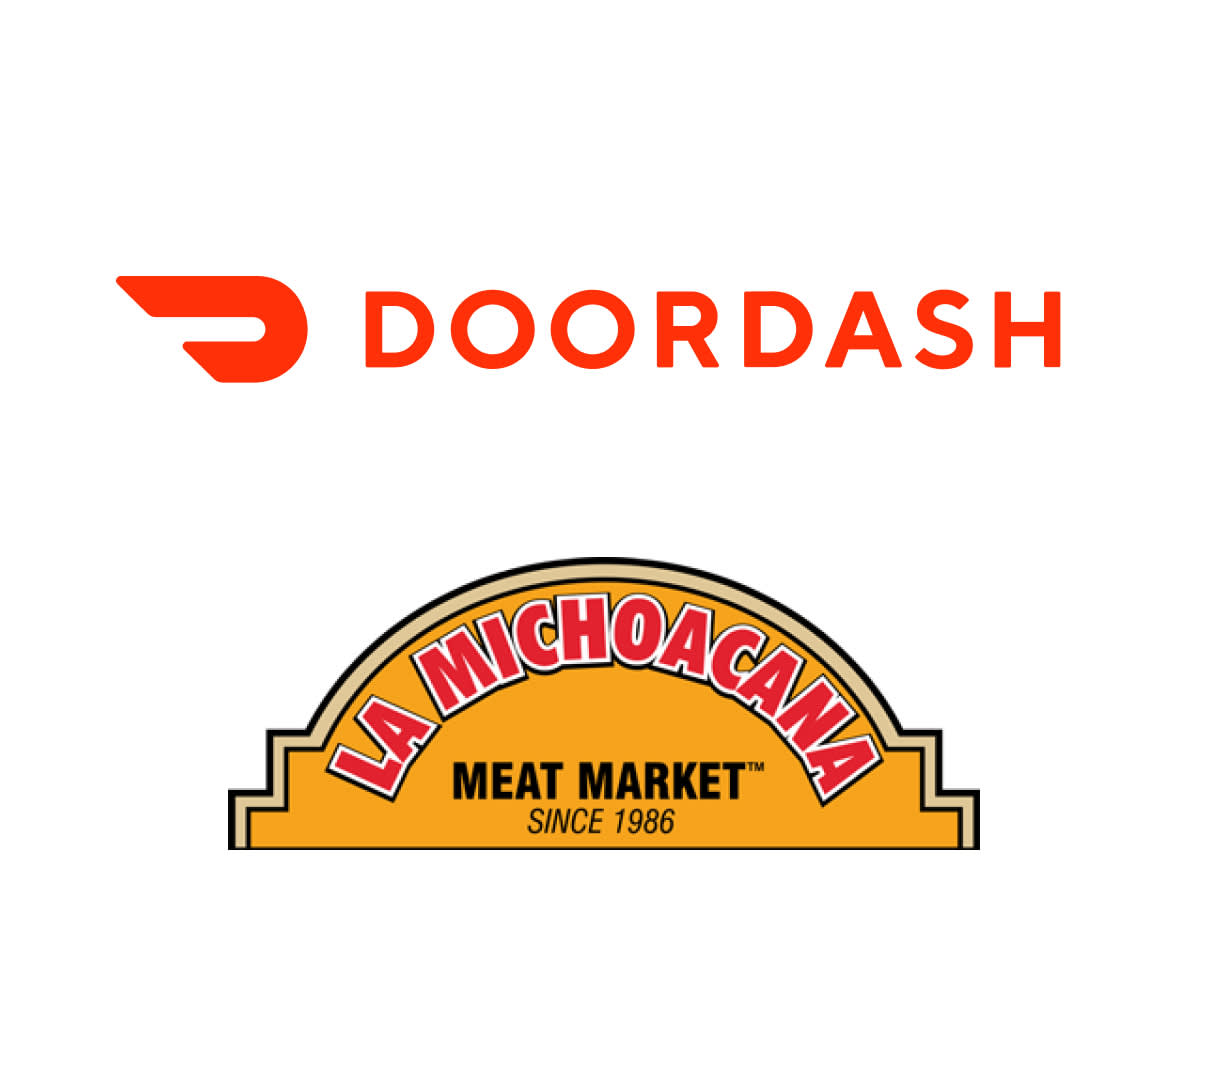 Logos from DoorDash and La Michoacana to celebrate the partnership 